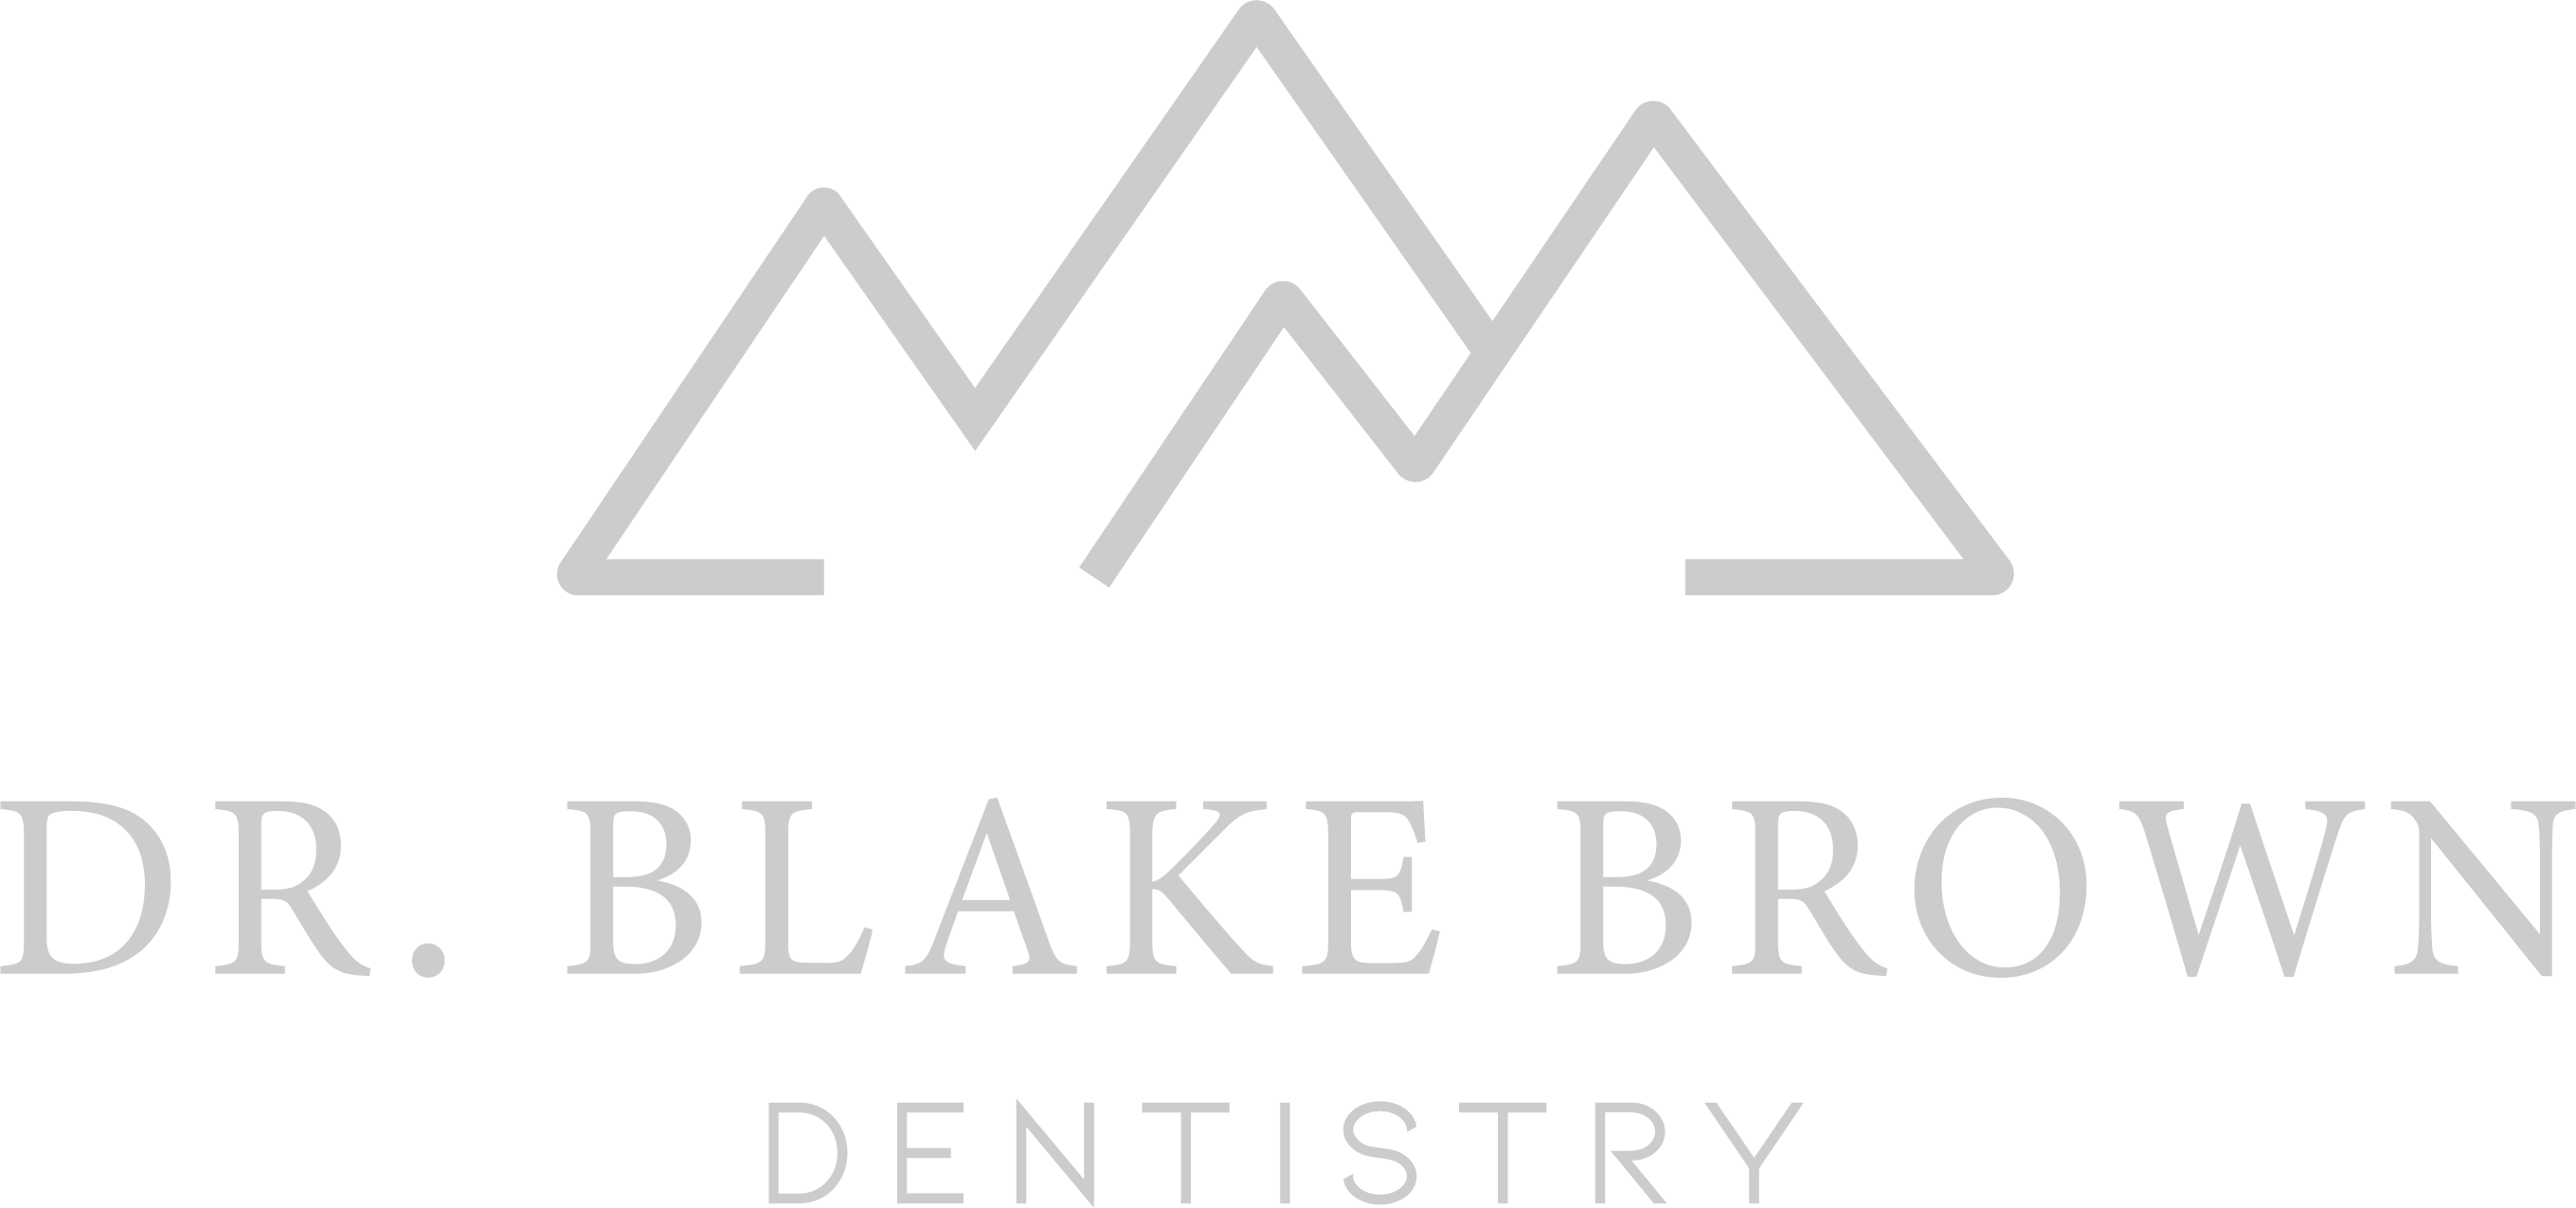 Dr. Blake Brown Dentistry